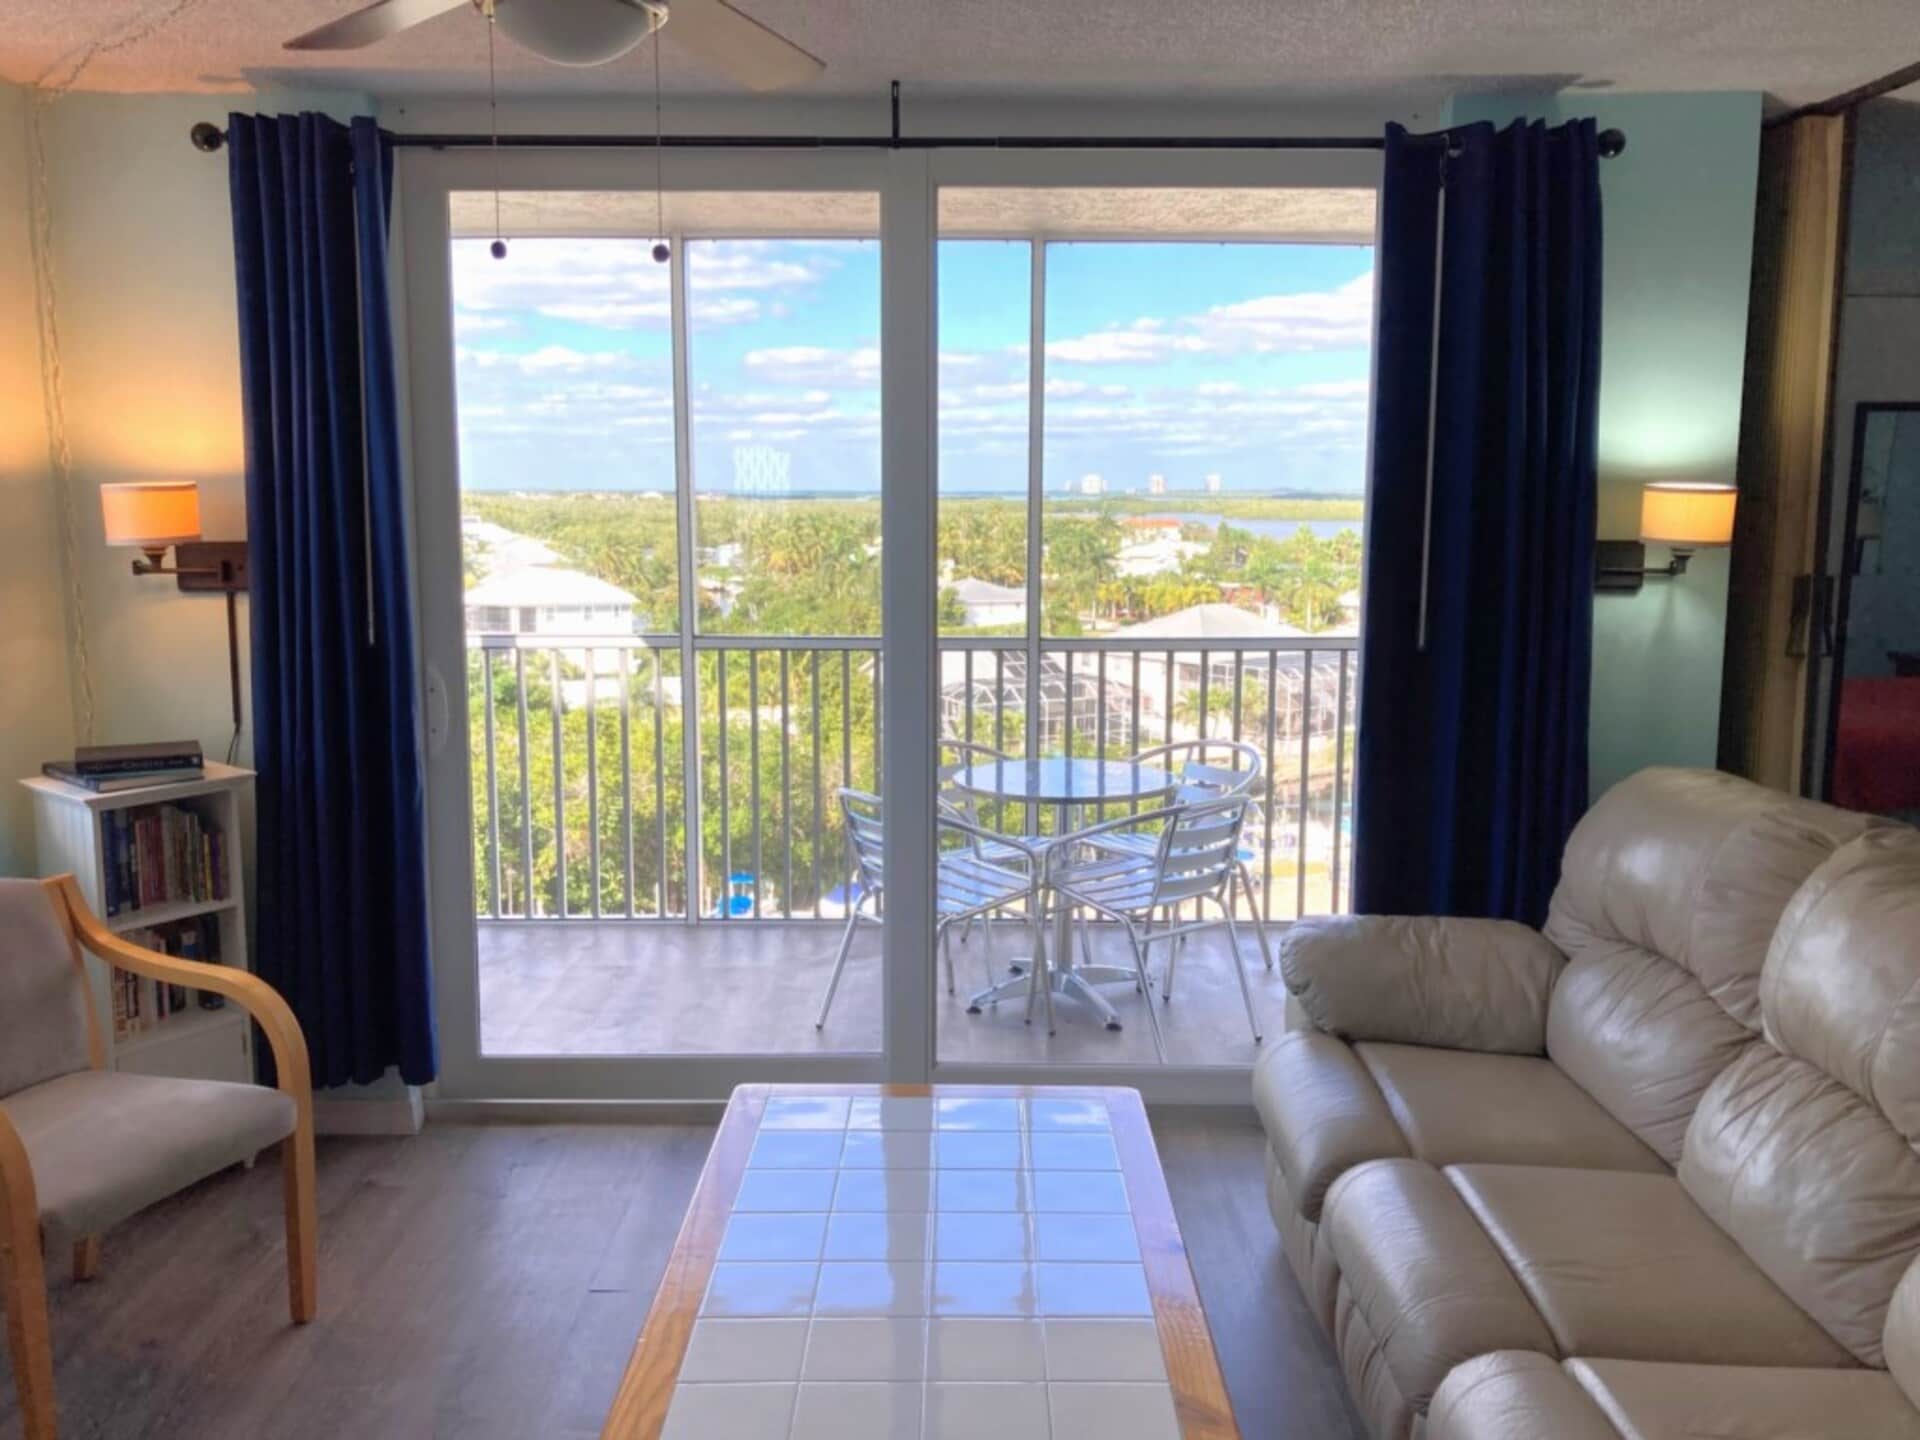 Property Image 2 - Exclusive Condo in One of most Prestigious Resorts, Bonita Beach, Florida Condo 5949